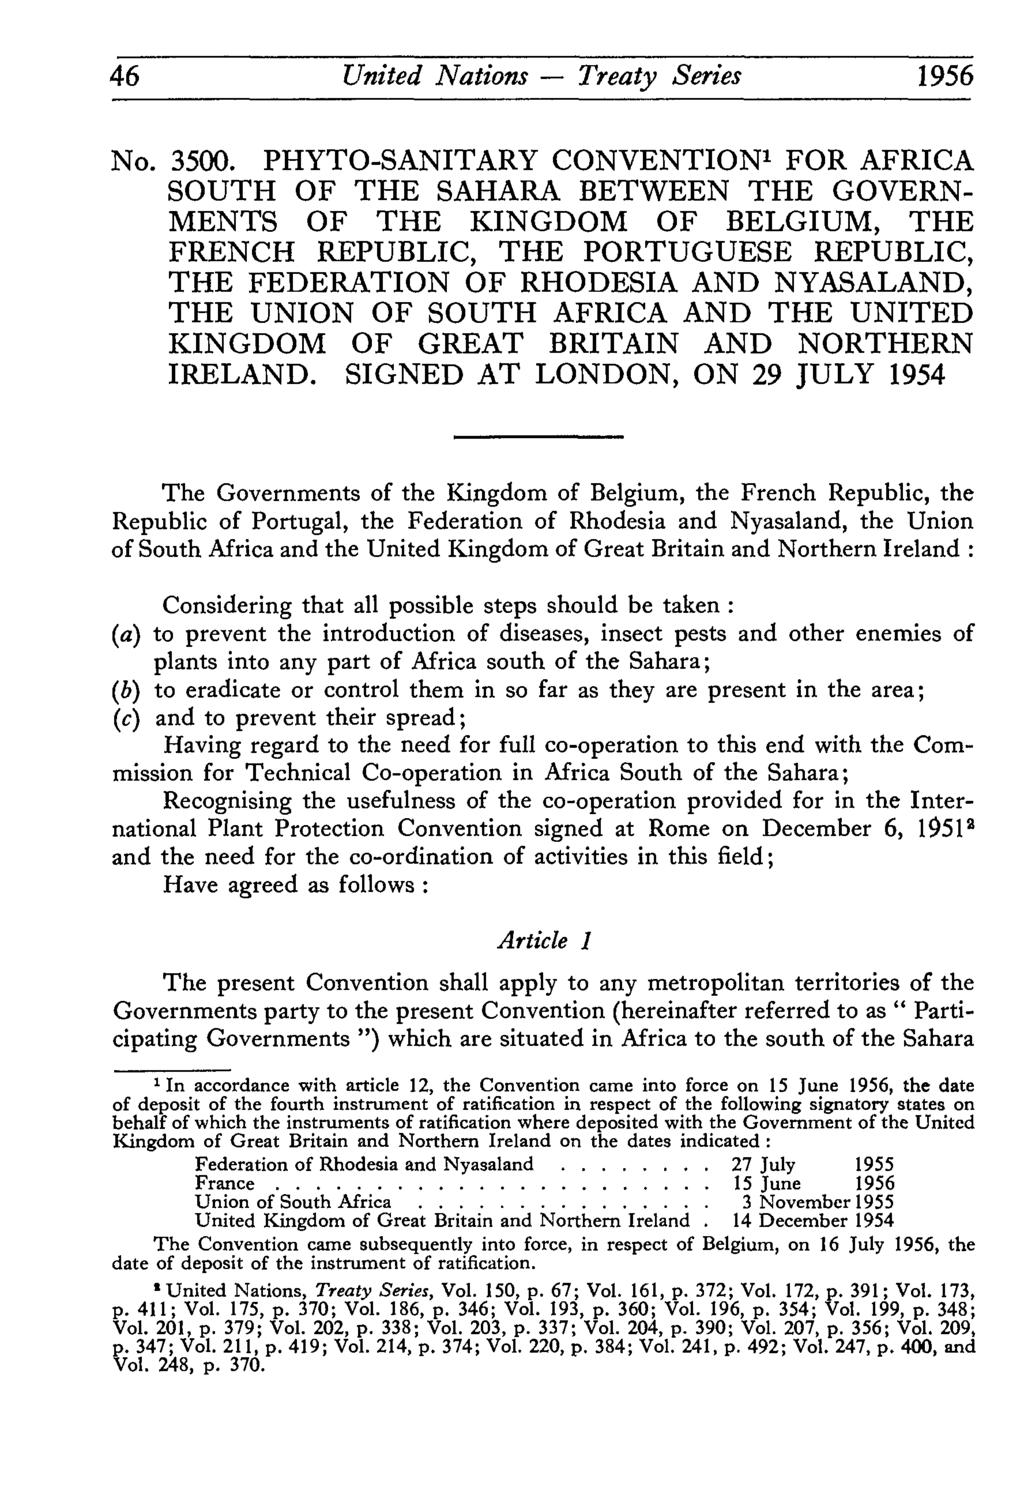 46 United Nations Treaty Series 1956.